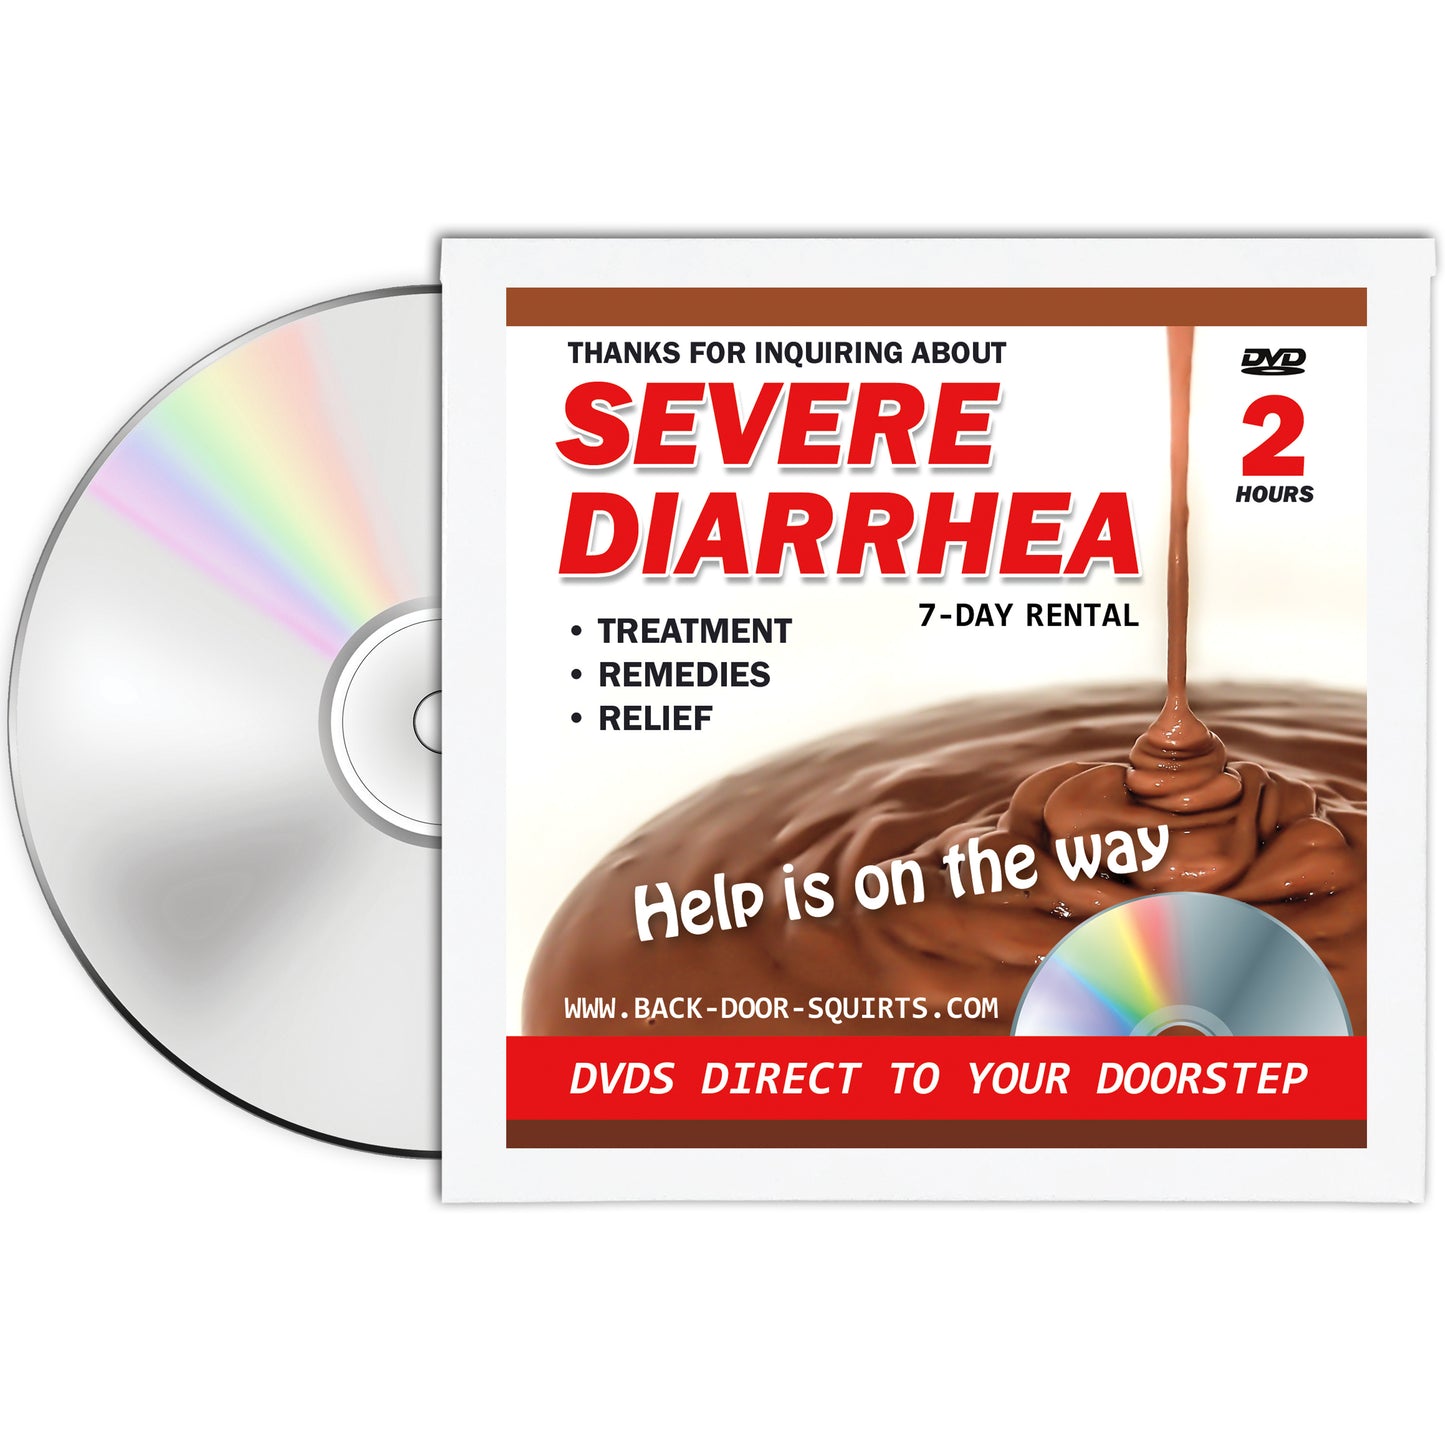 Severe Diarrhea Prank Mail DVD GIft